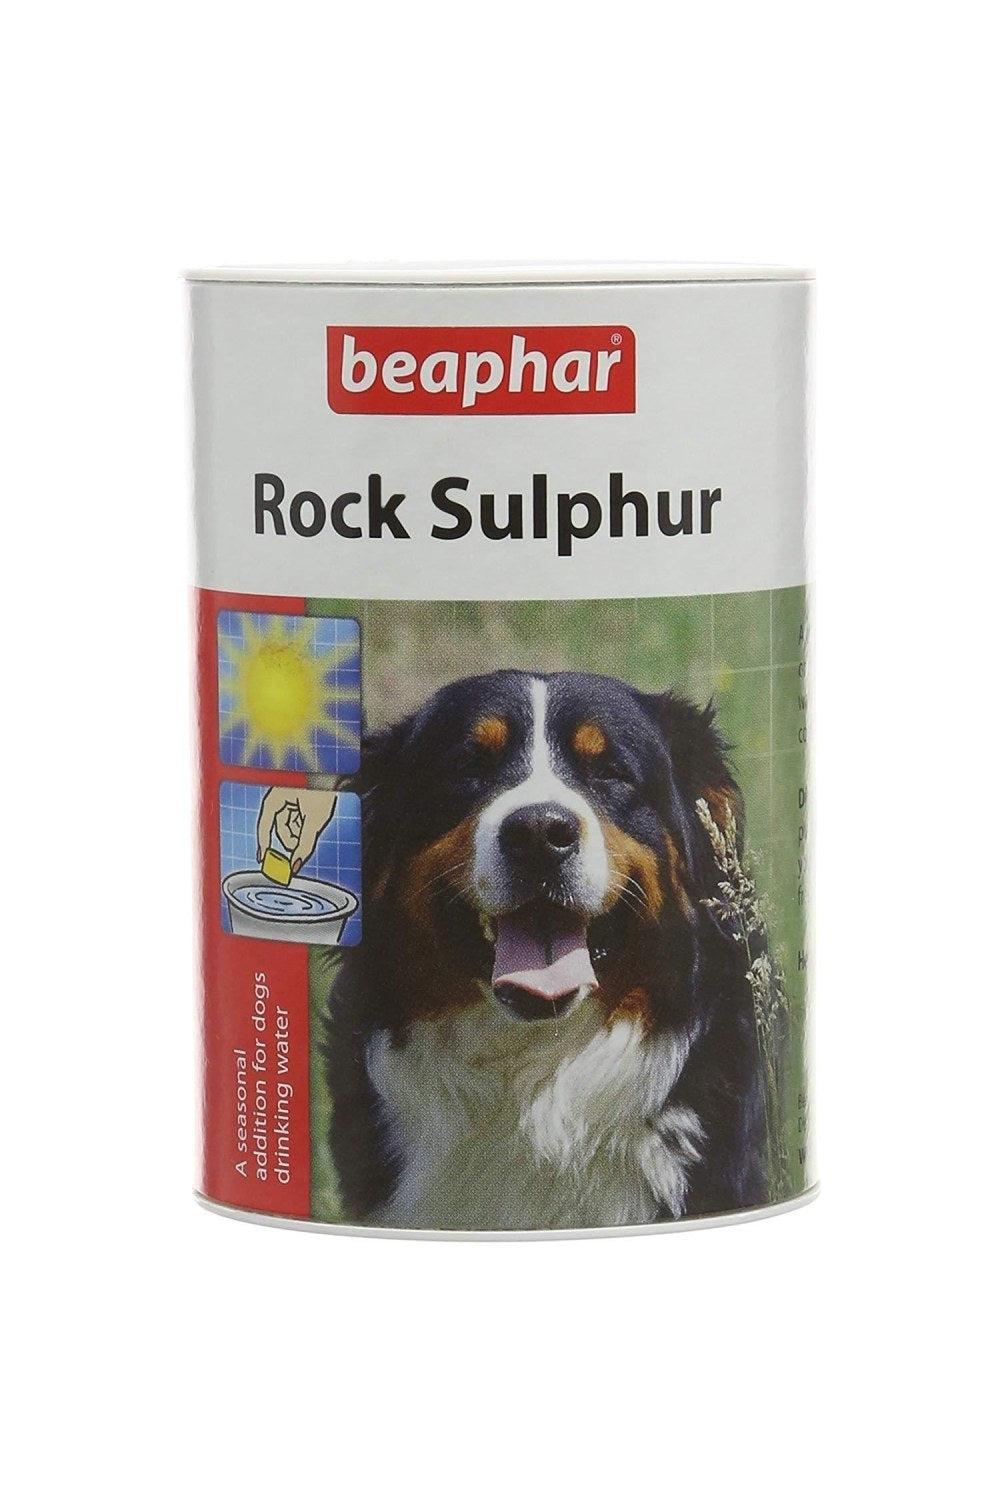 Beaphar Rock Sulphur Dog Supplement (May Vary) (3.5oz)